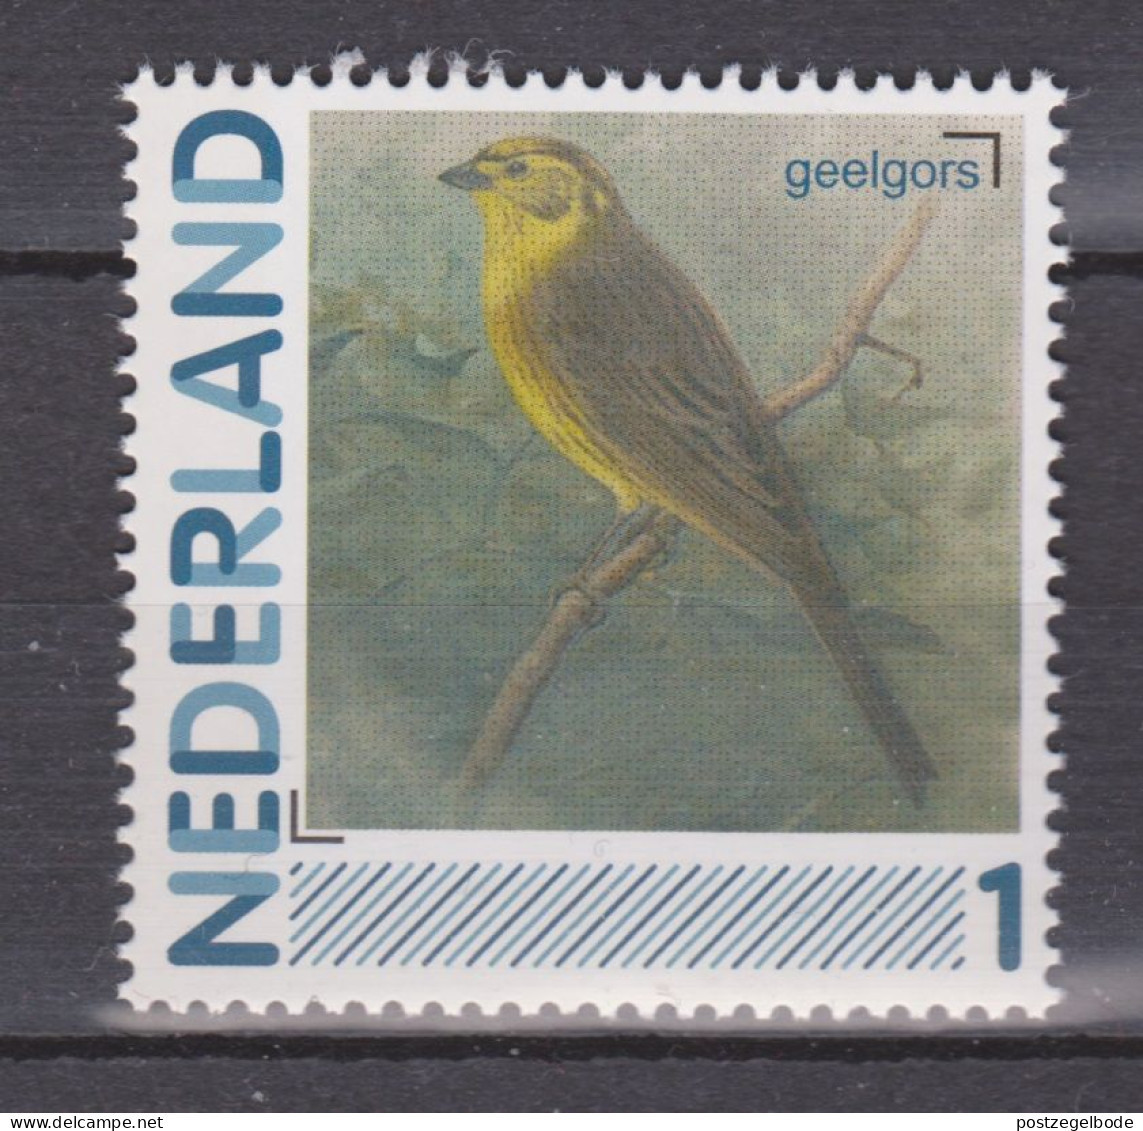 Nederland Netherlands Pays Bas Holanda MNH Geelgors Yellowhammer Bruant Jaune Escribano Cerillo Vogel Bird Ave Oiseau - Moineaux